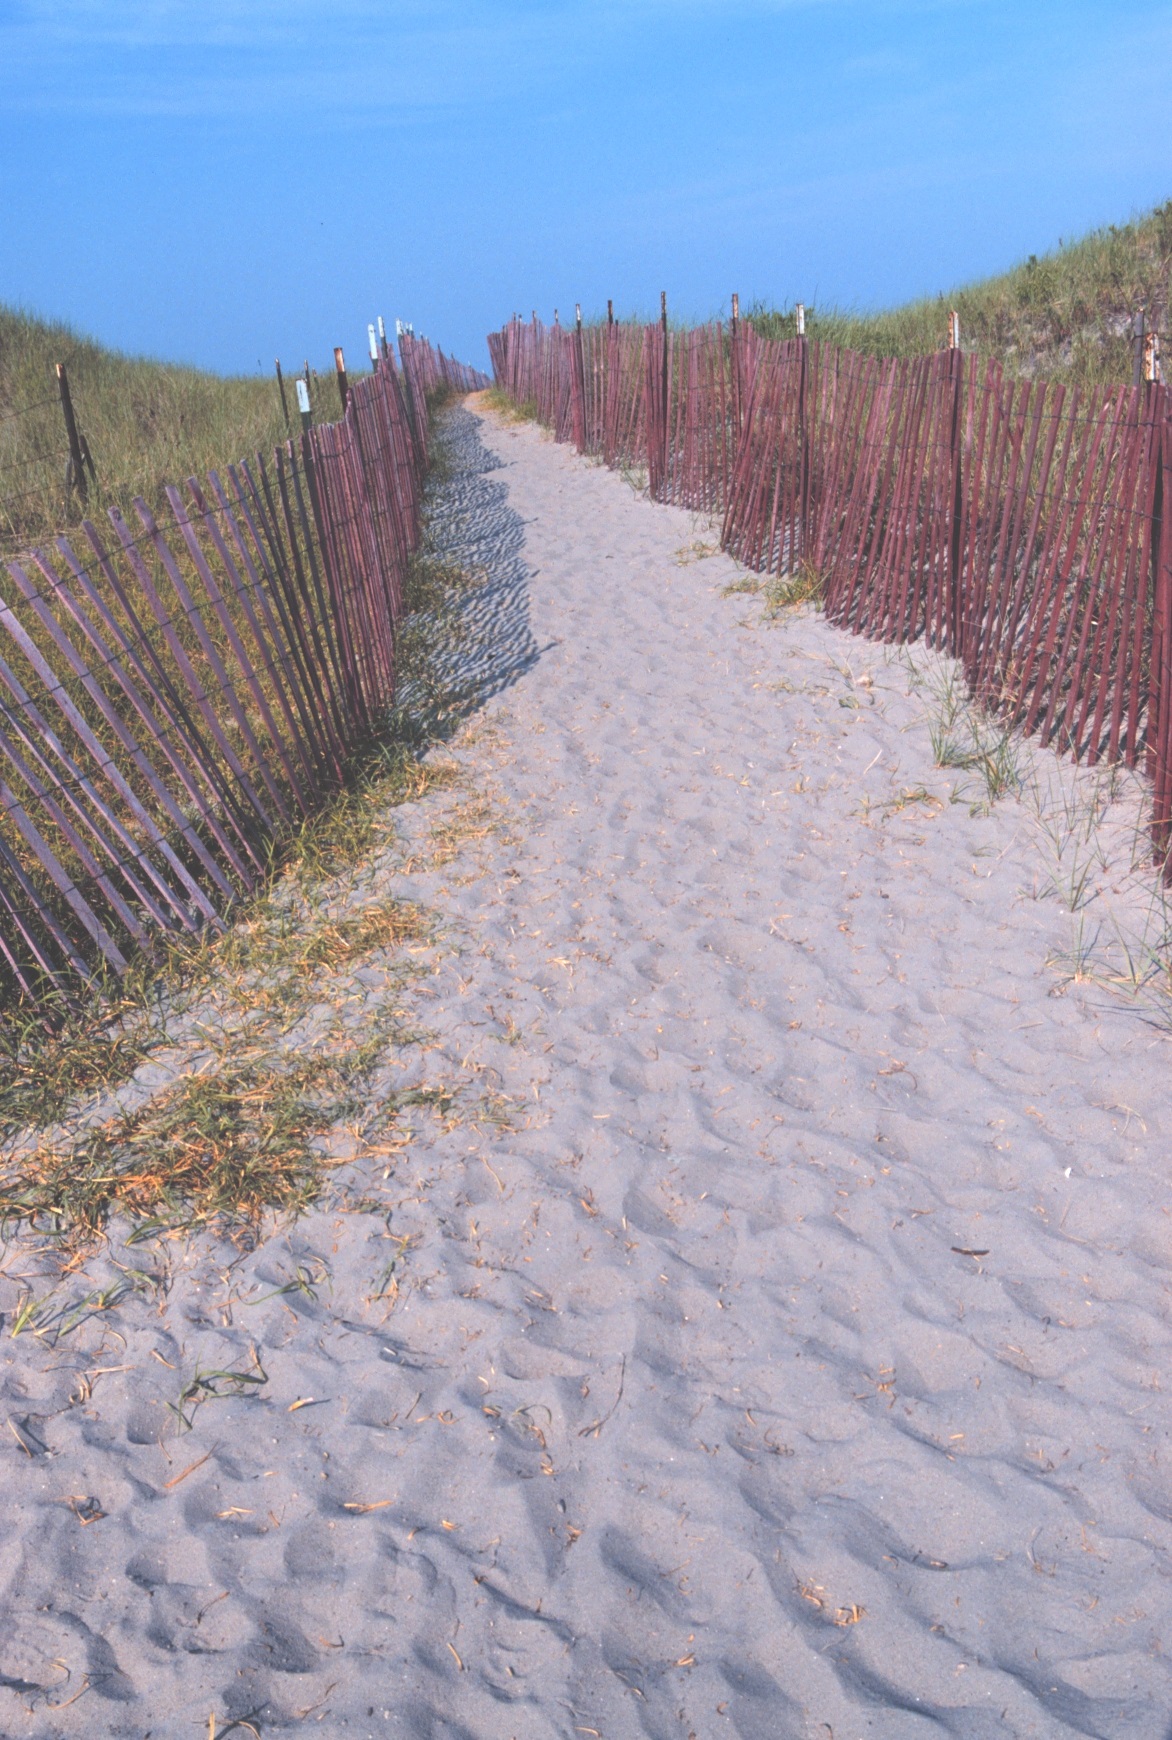 Sandy path between picket fences through beach dunes